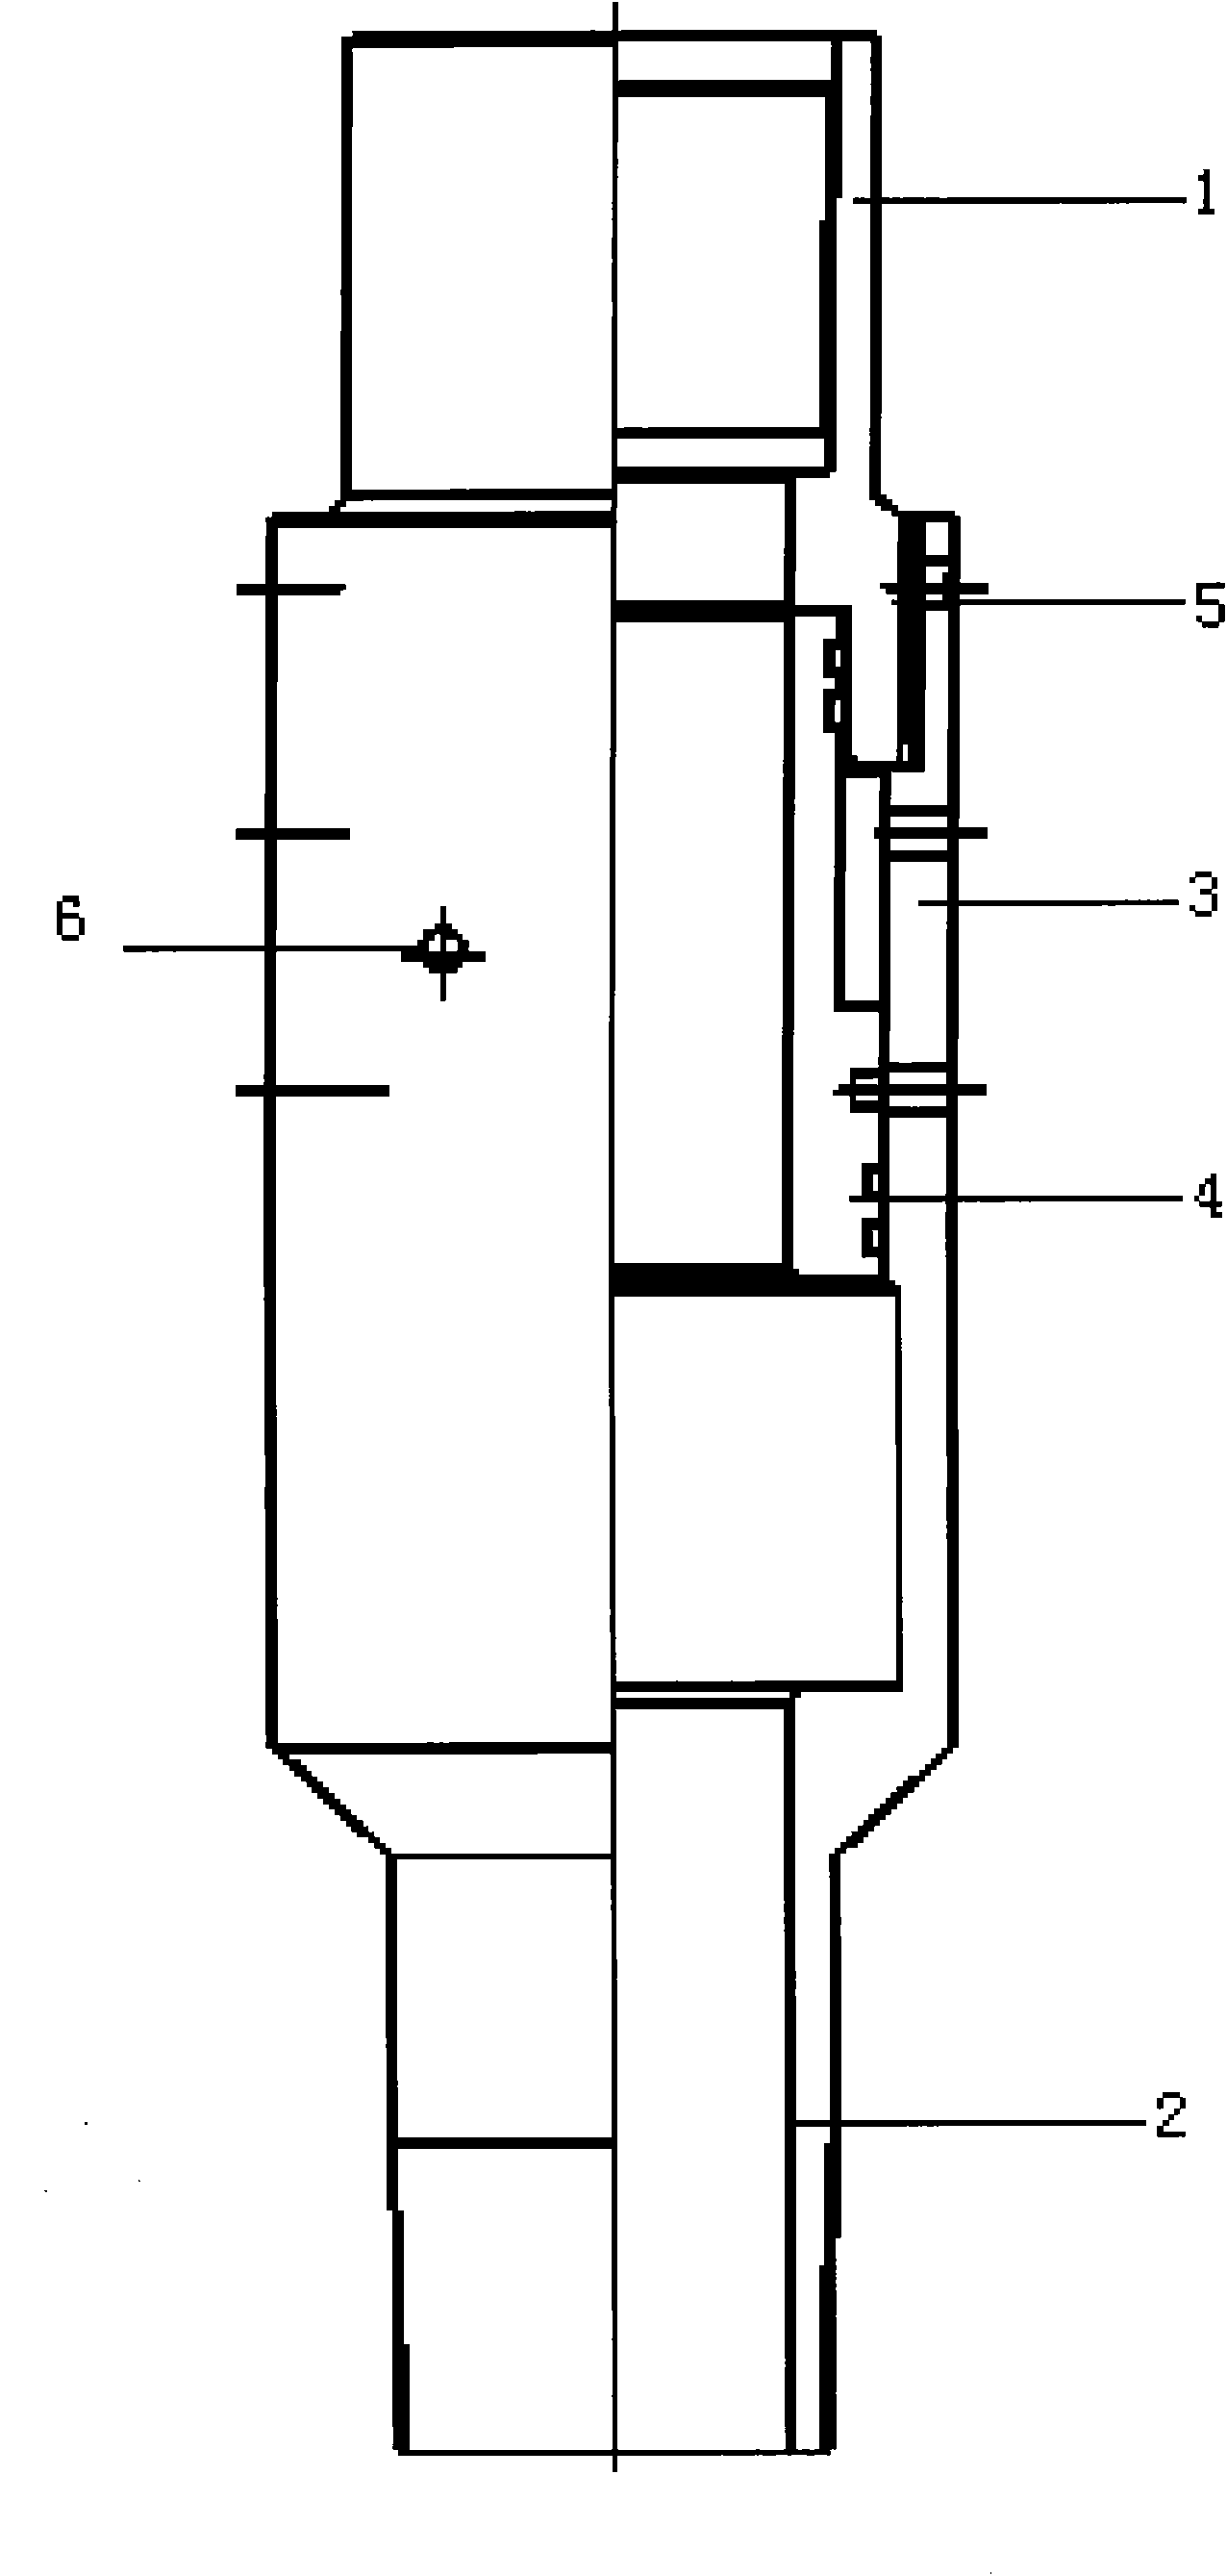 External differential pressure opening circulating valve